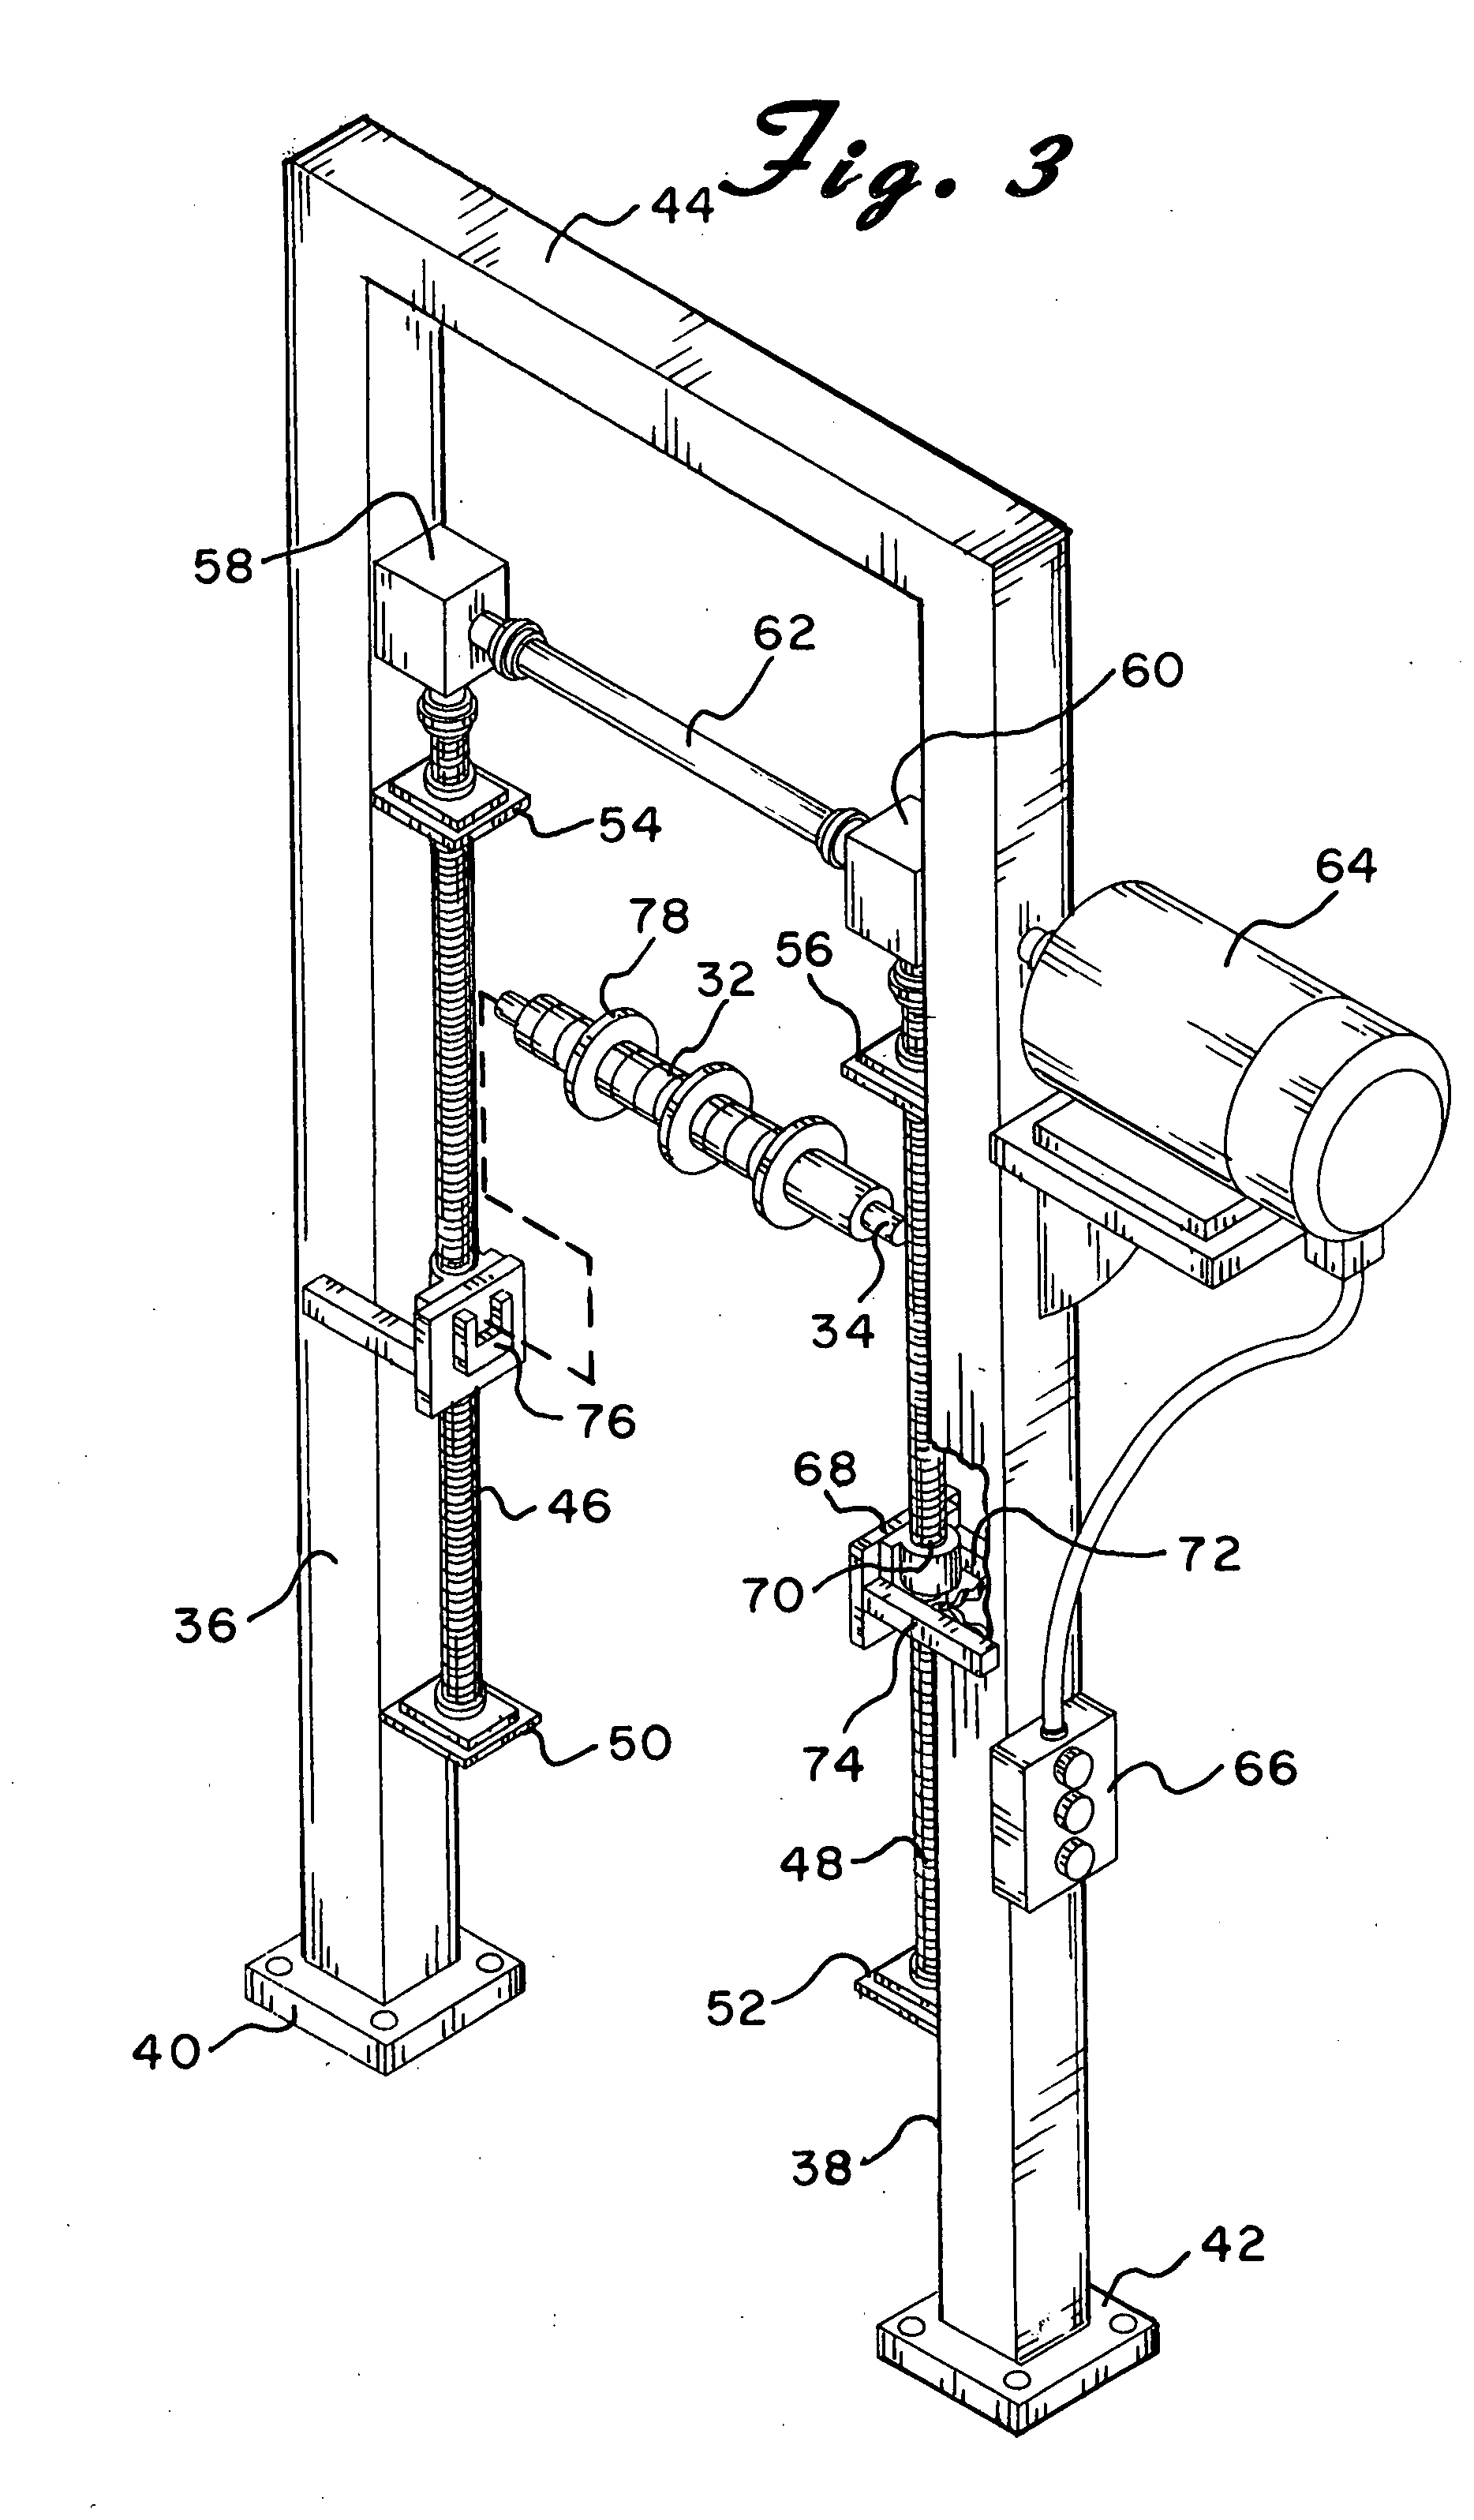 Adjustable vertical accumulator for slitting operation